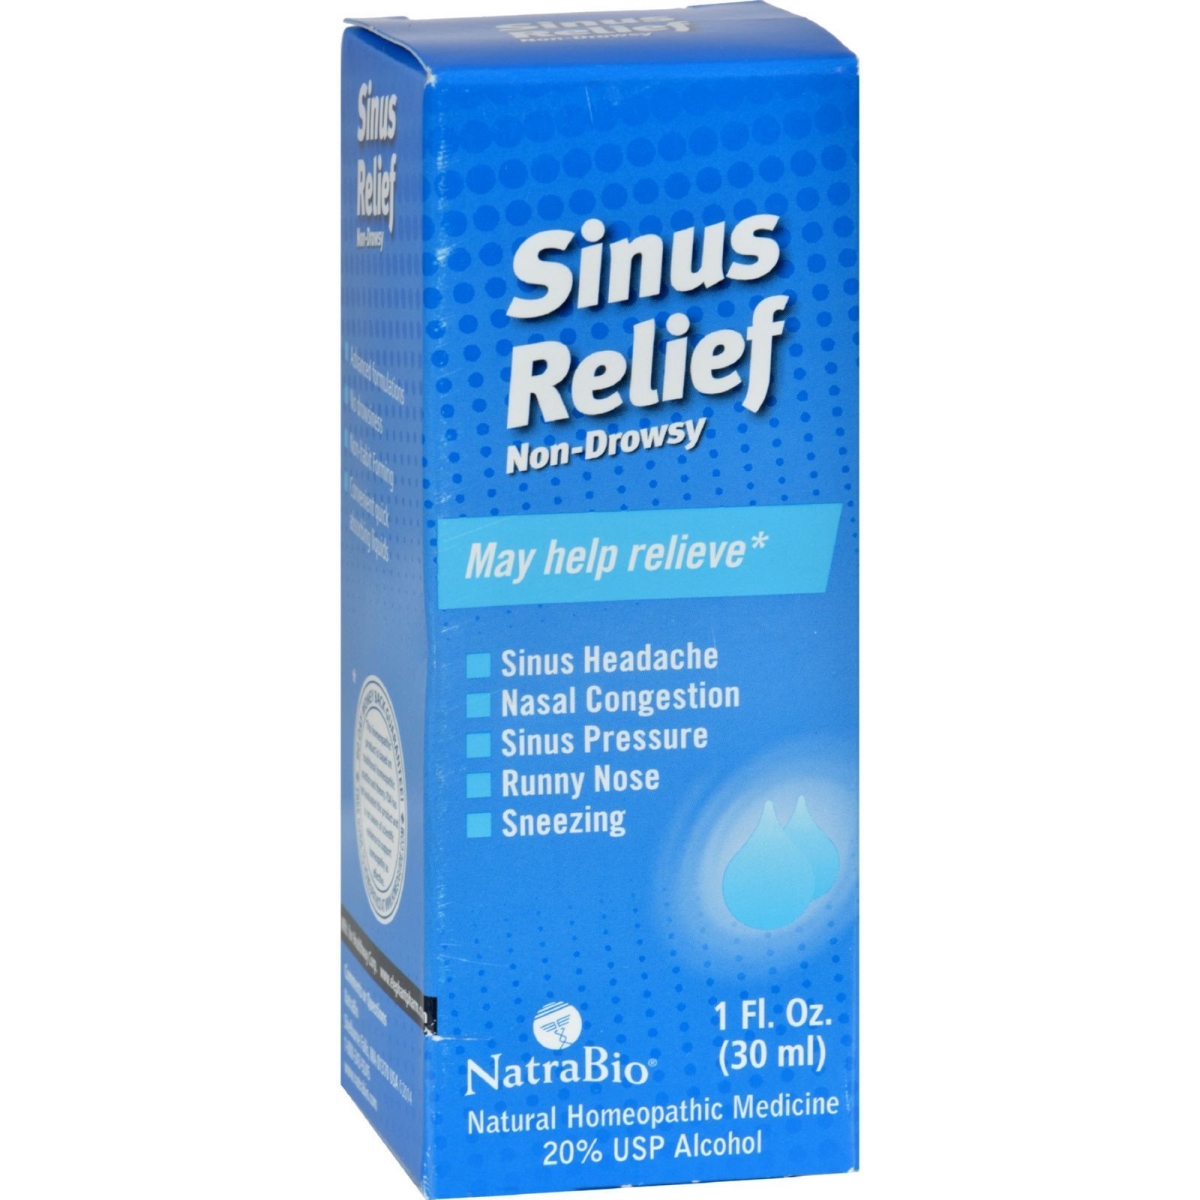 Natrabio Hg0250100 1 Fl. Oz Sinus Relief Non-drowsy Drops